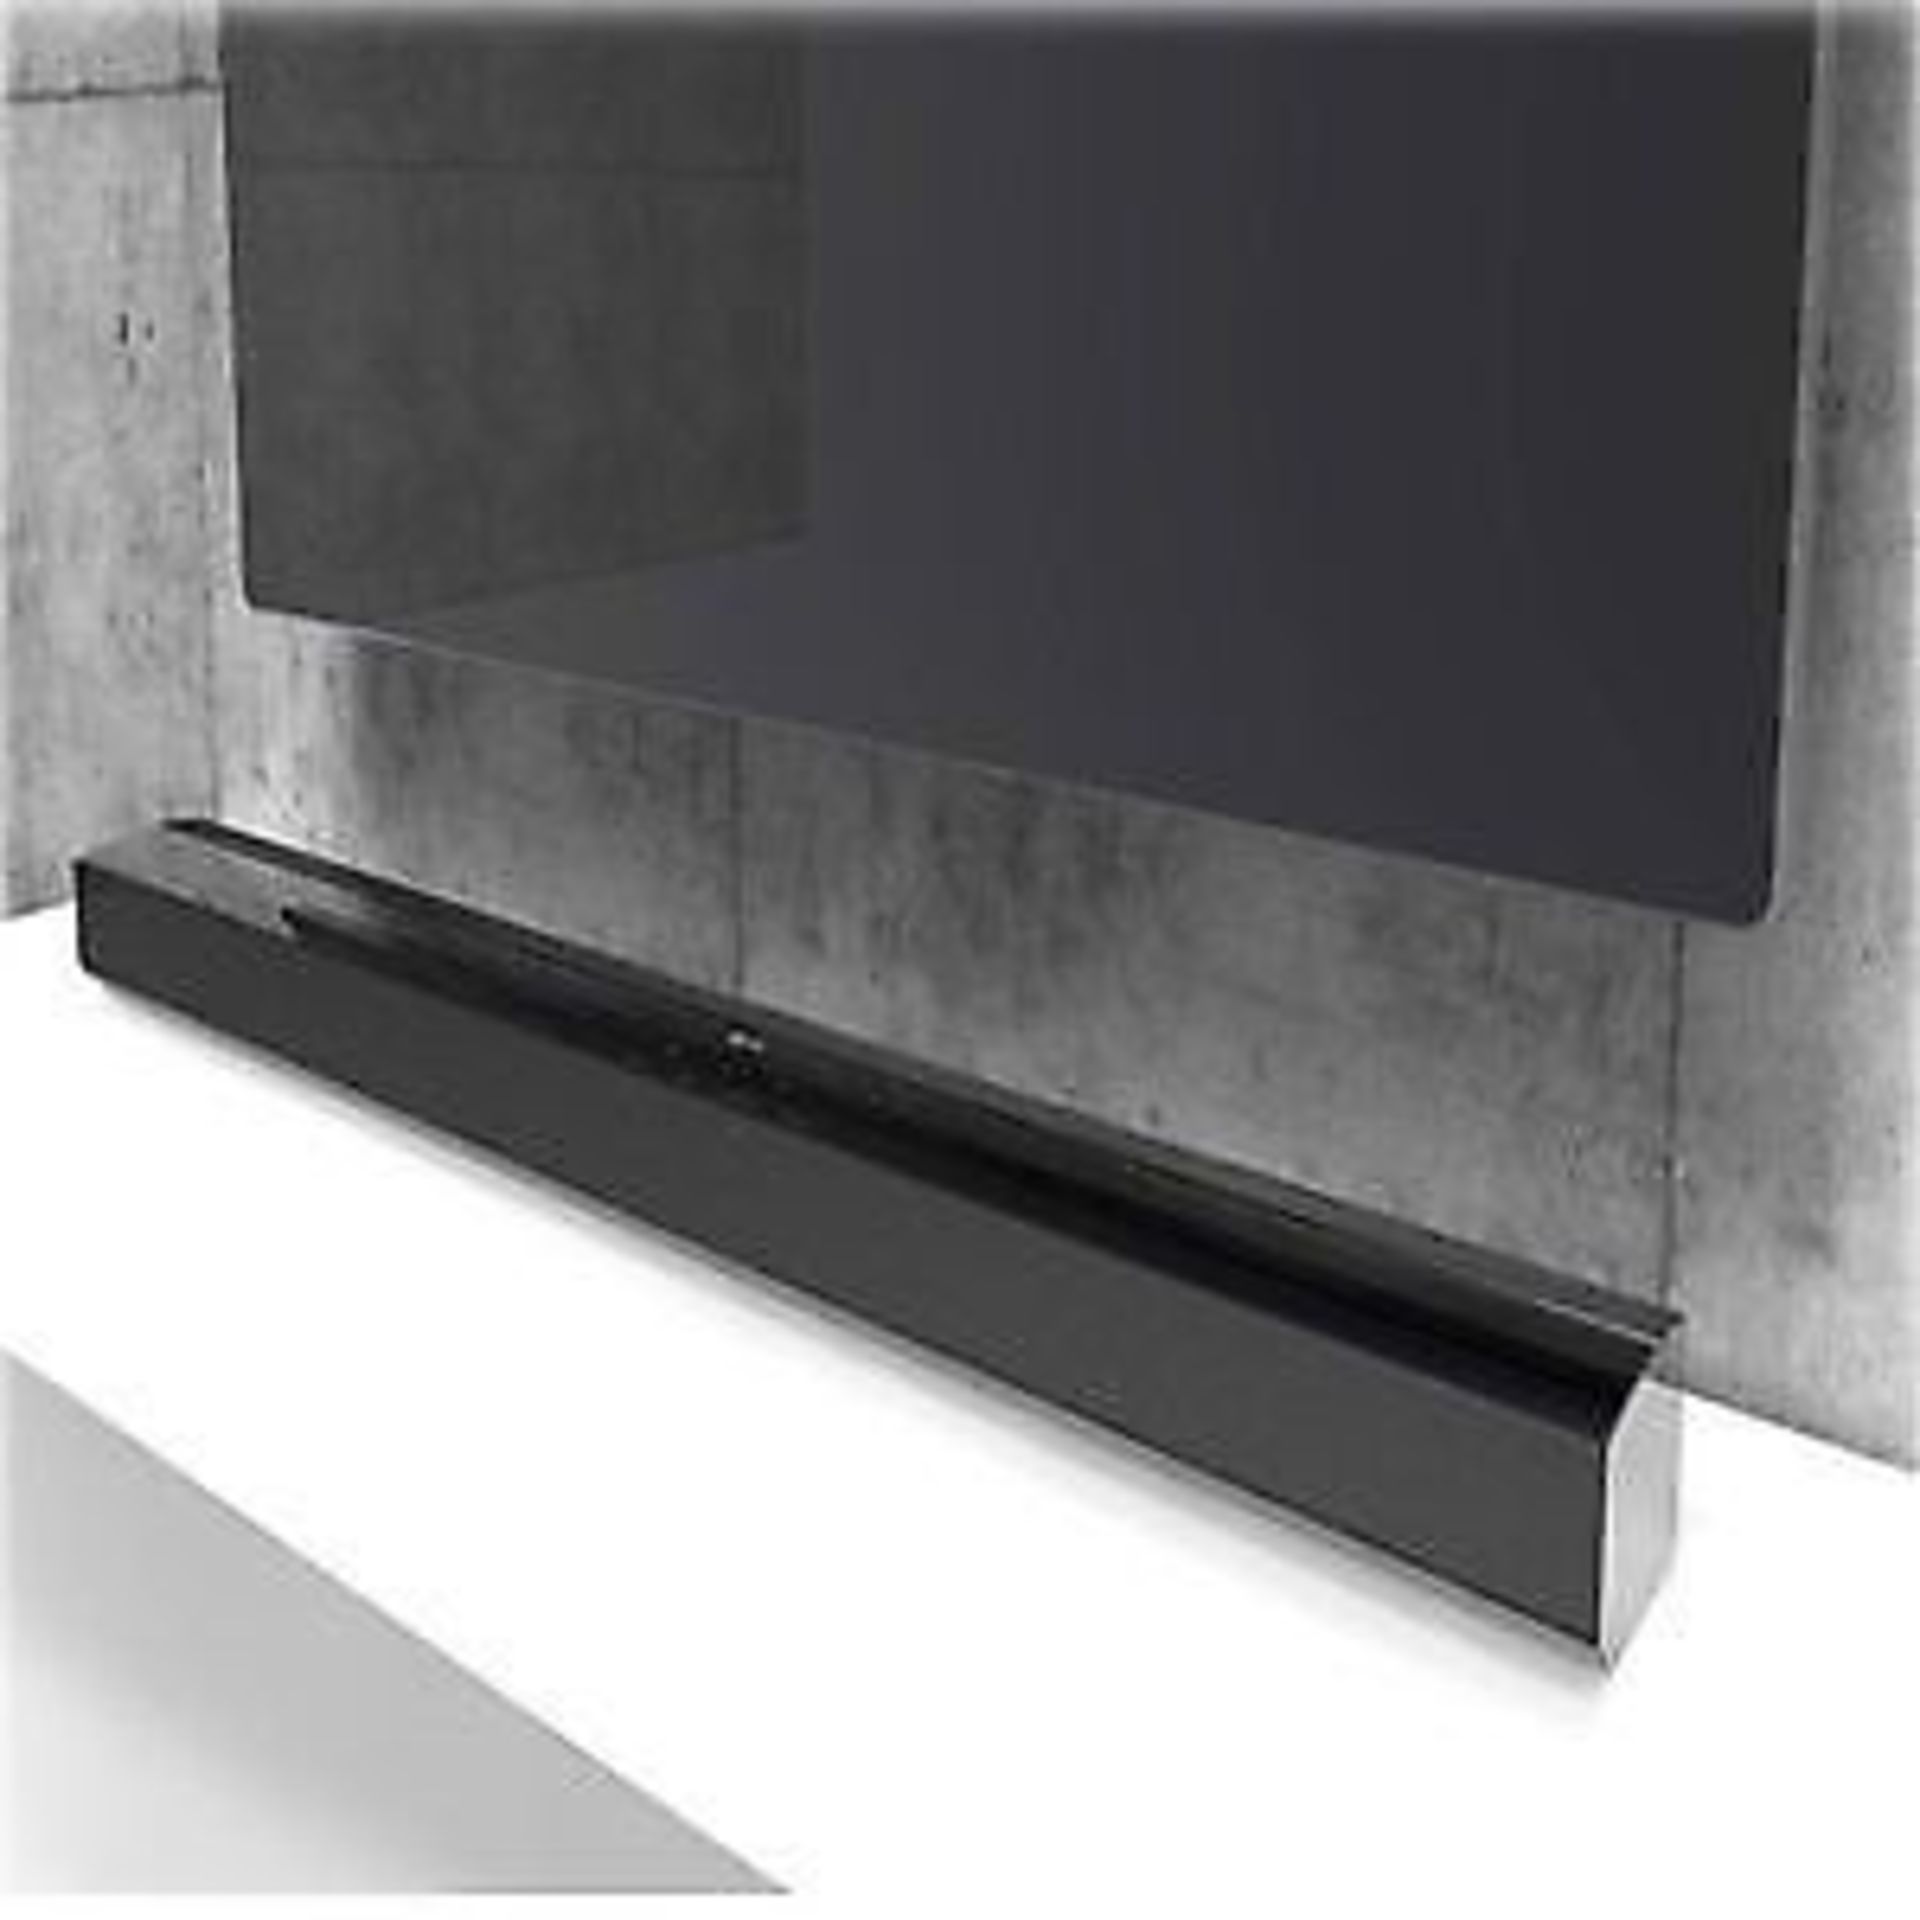 LG NB2020 40W Soundbar Speaker - Home Cinema Sound - Brand New - Boxed    Brand New - Boxed -